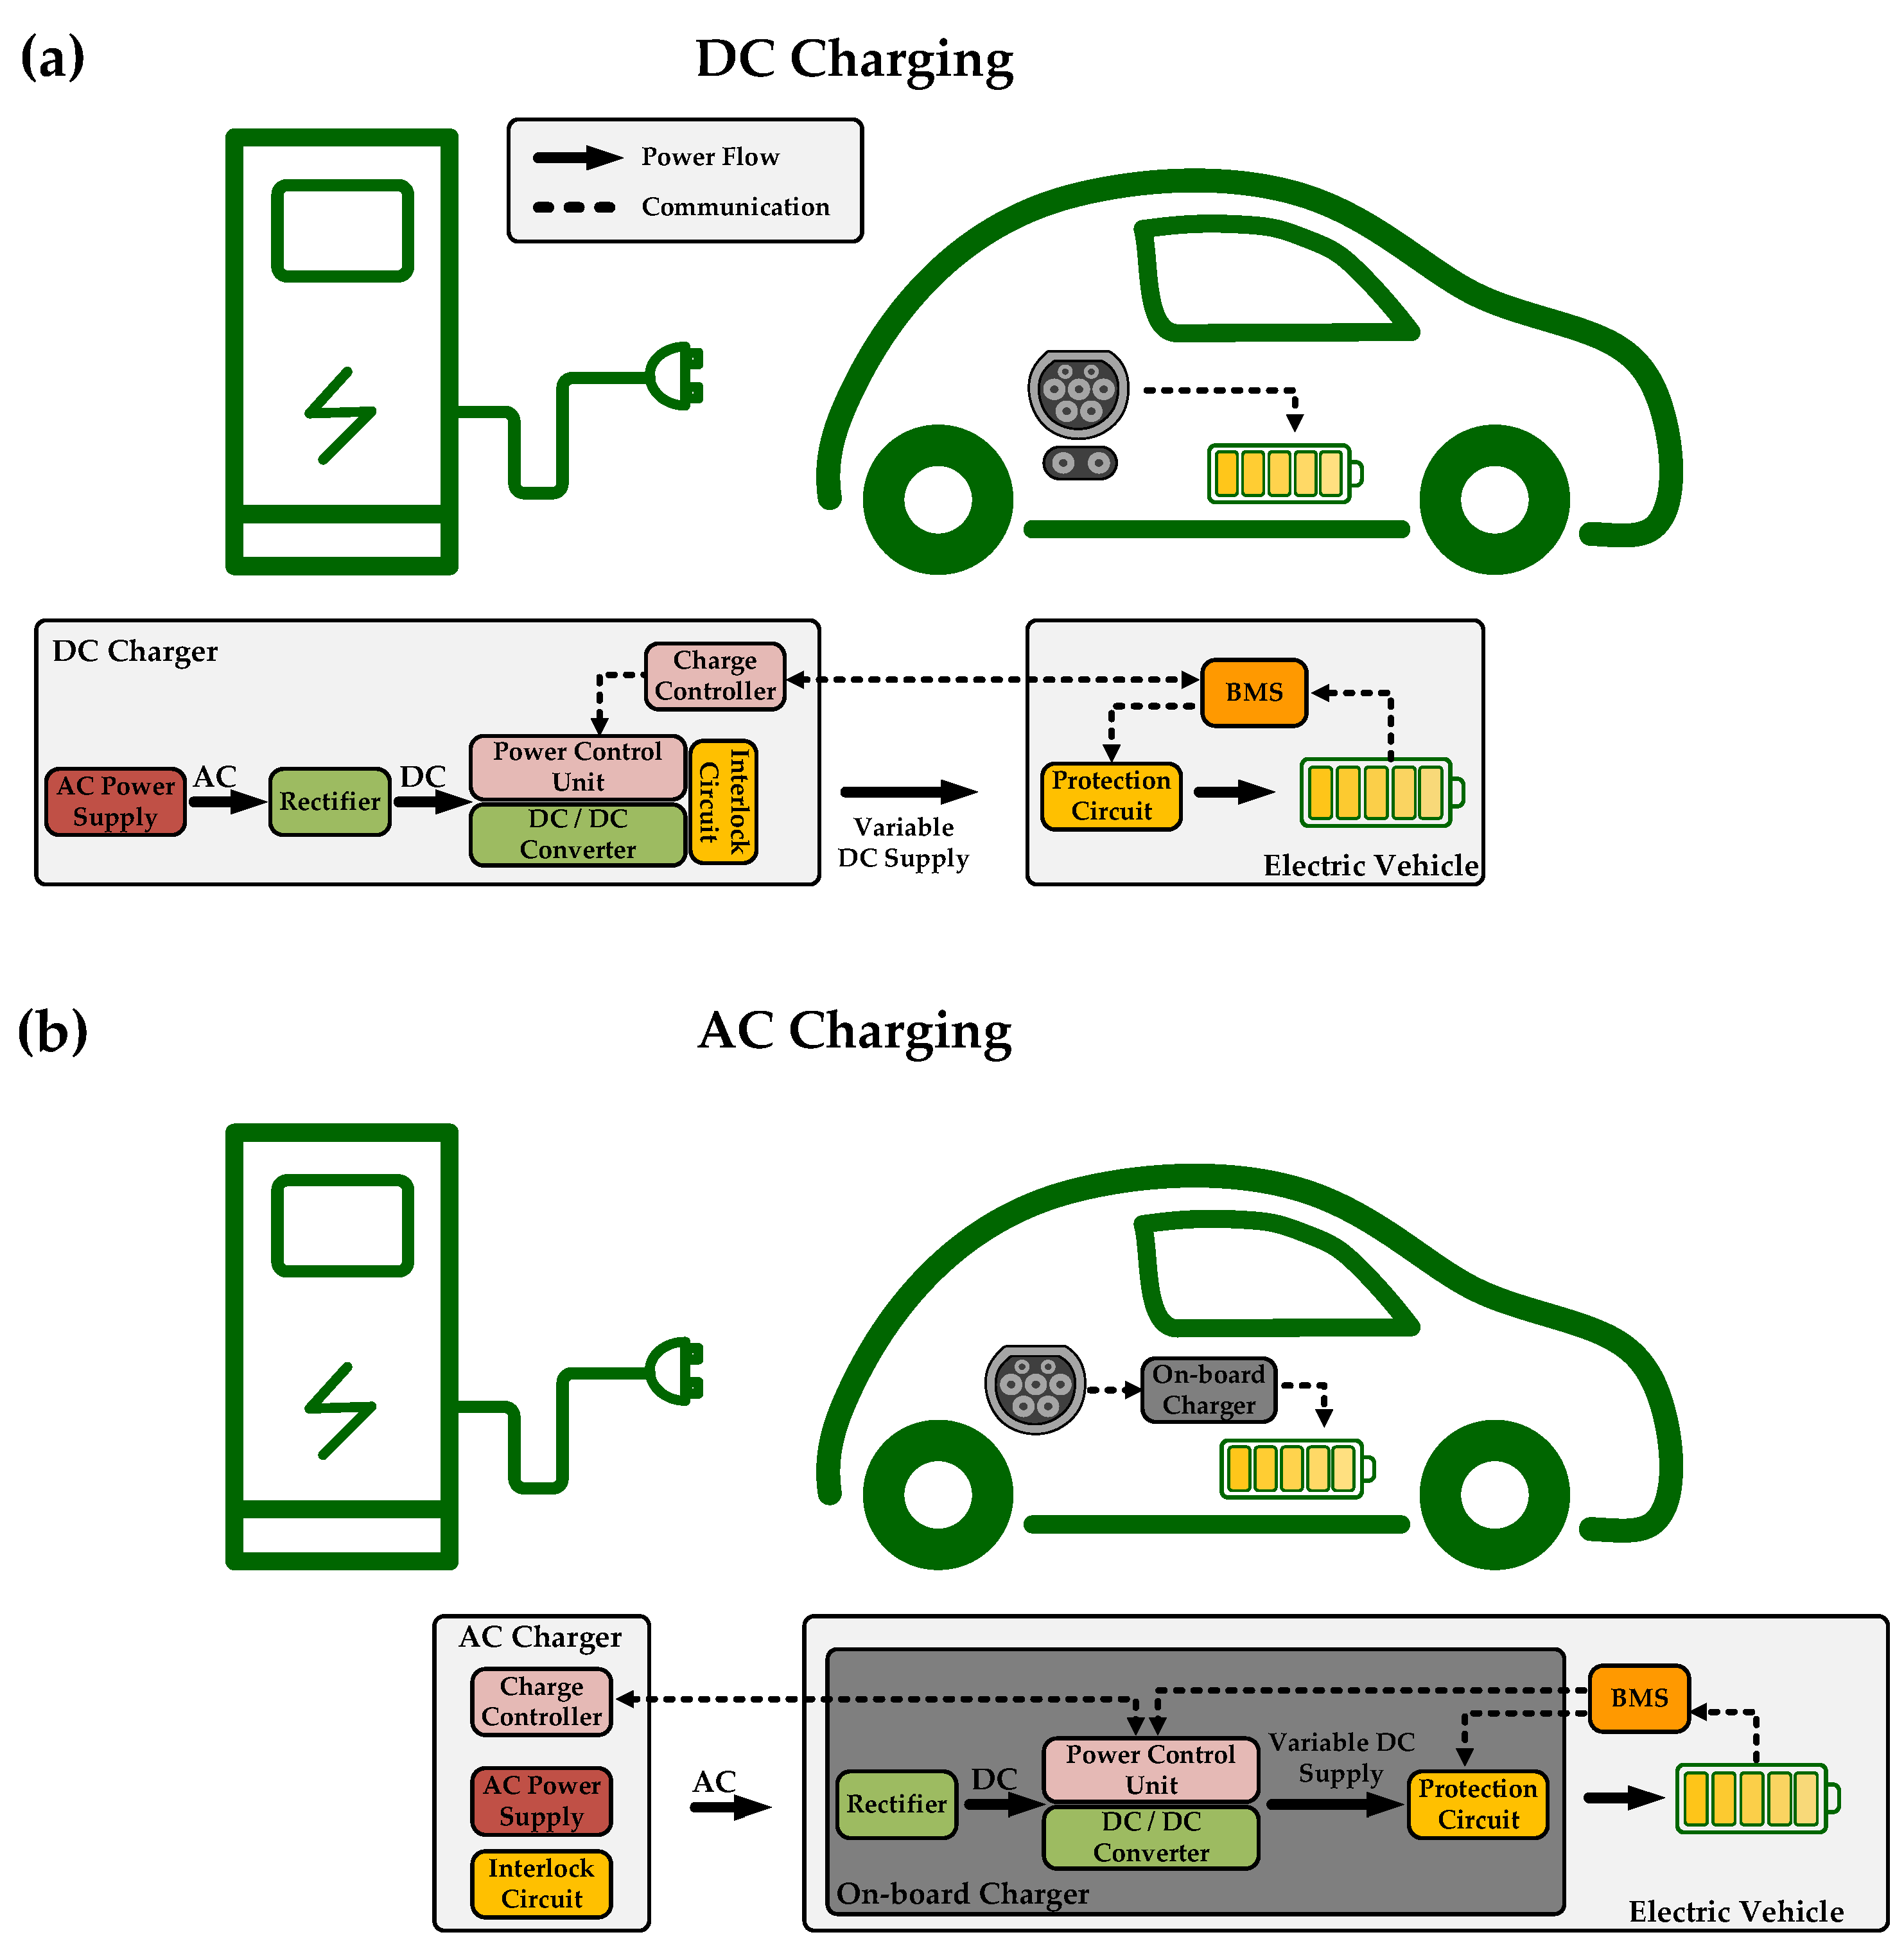 Level 2 Versus Level 3 EV Chargers - Future Energy